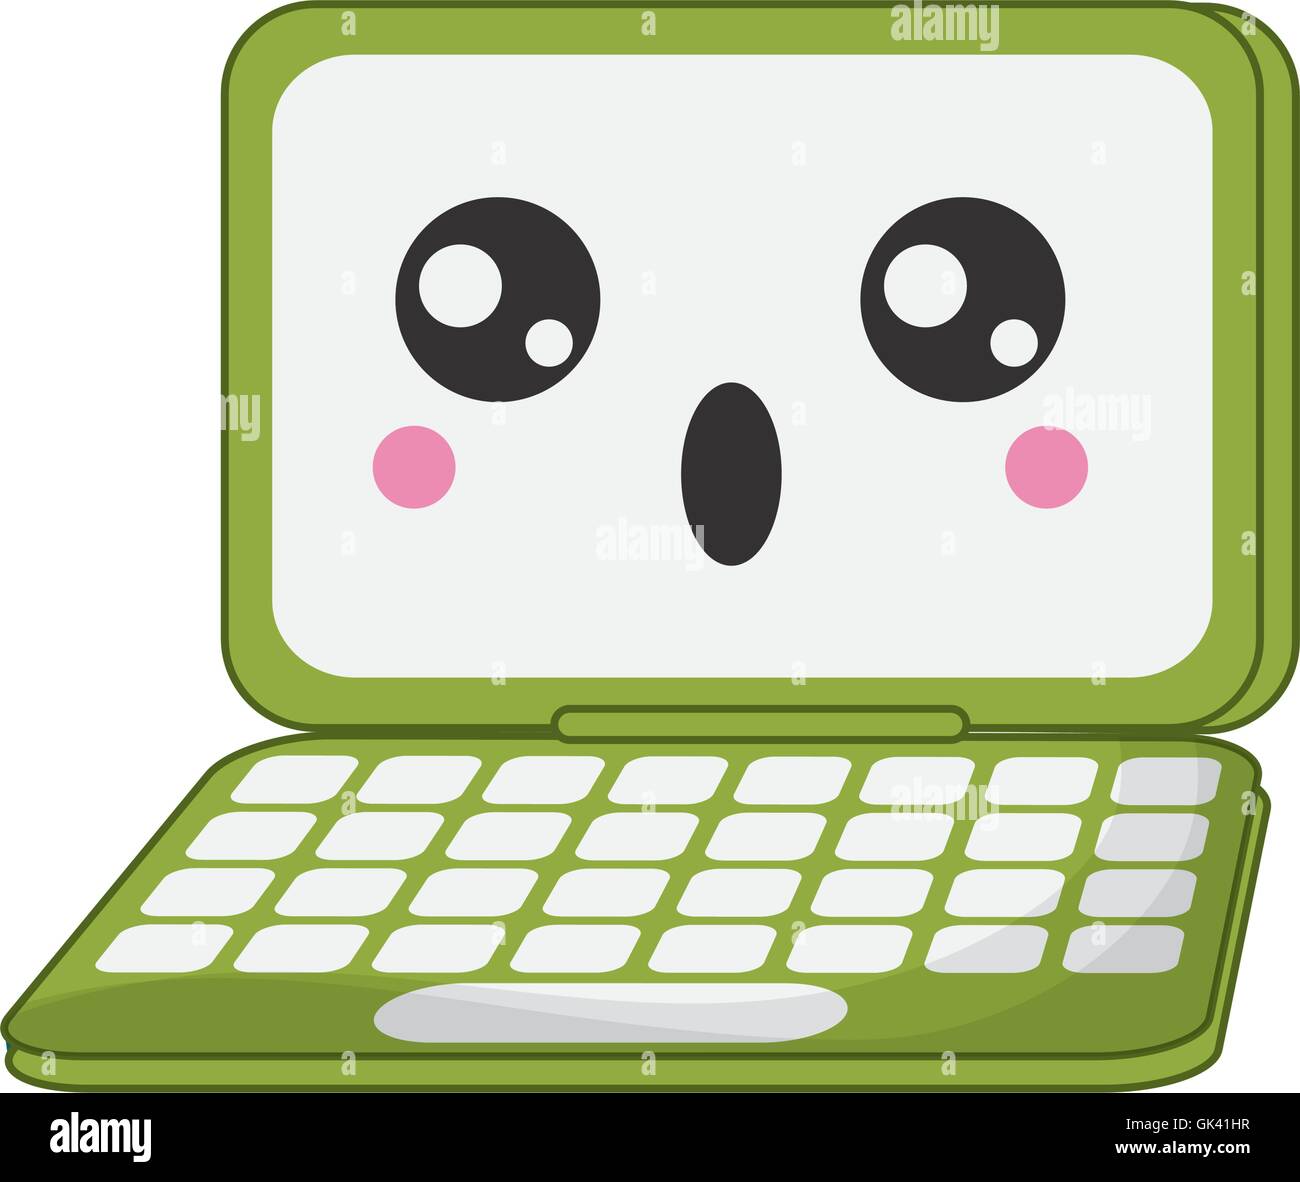 kawaii laptop icon Stock Vector Image & Art - Alamy